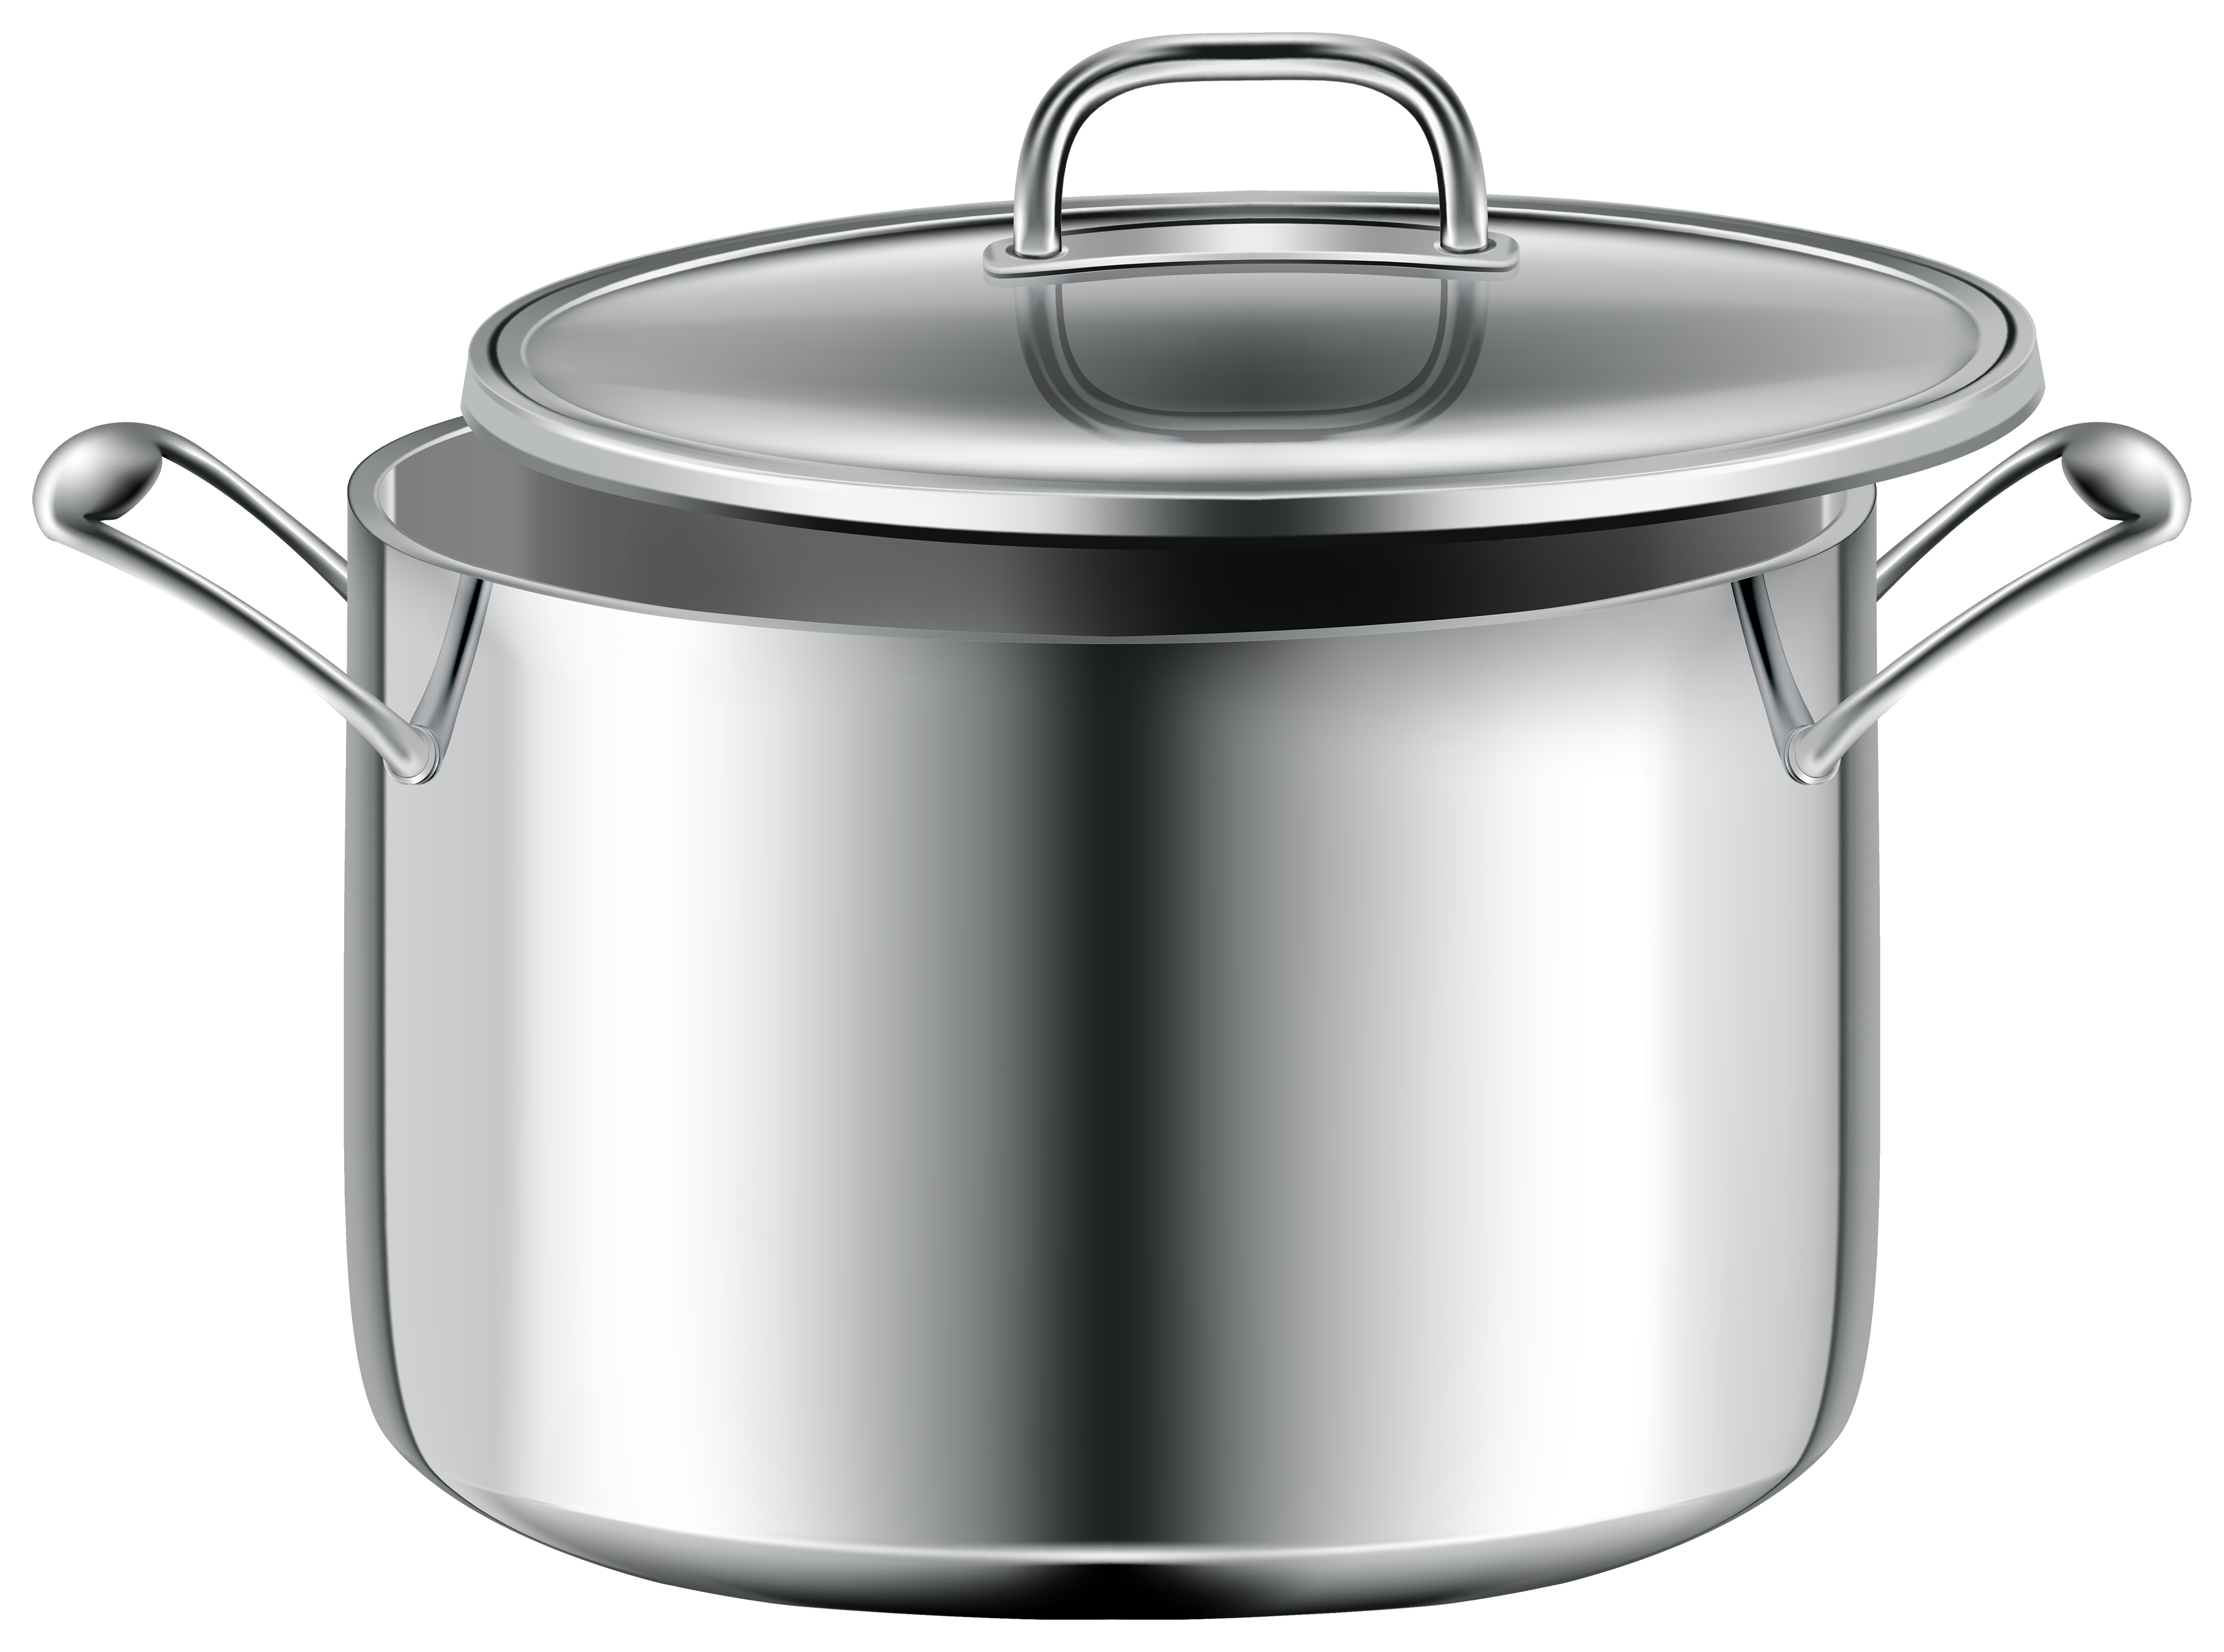 Silver Cooking Pot Clipart - Best WEB Clipart